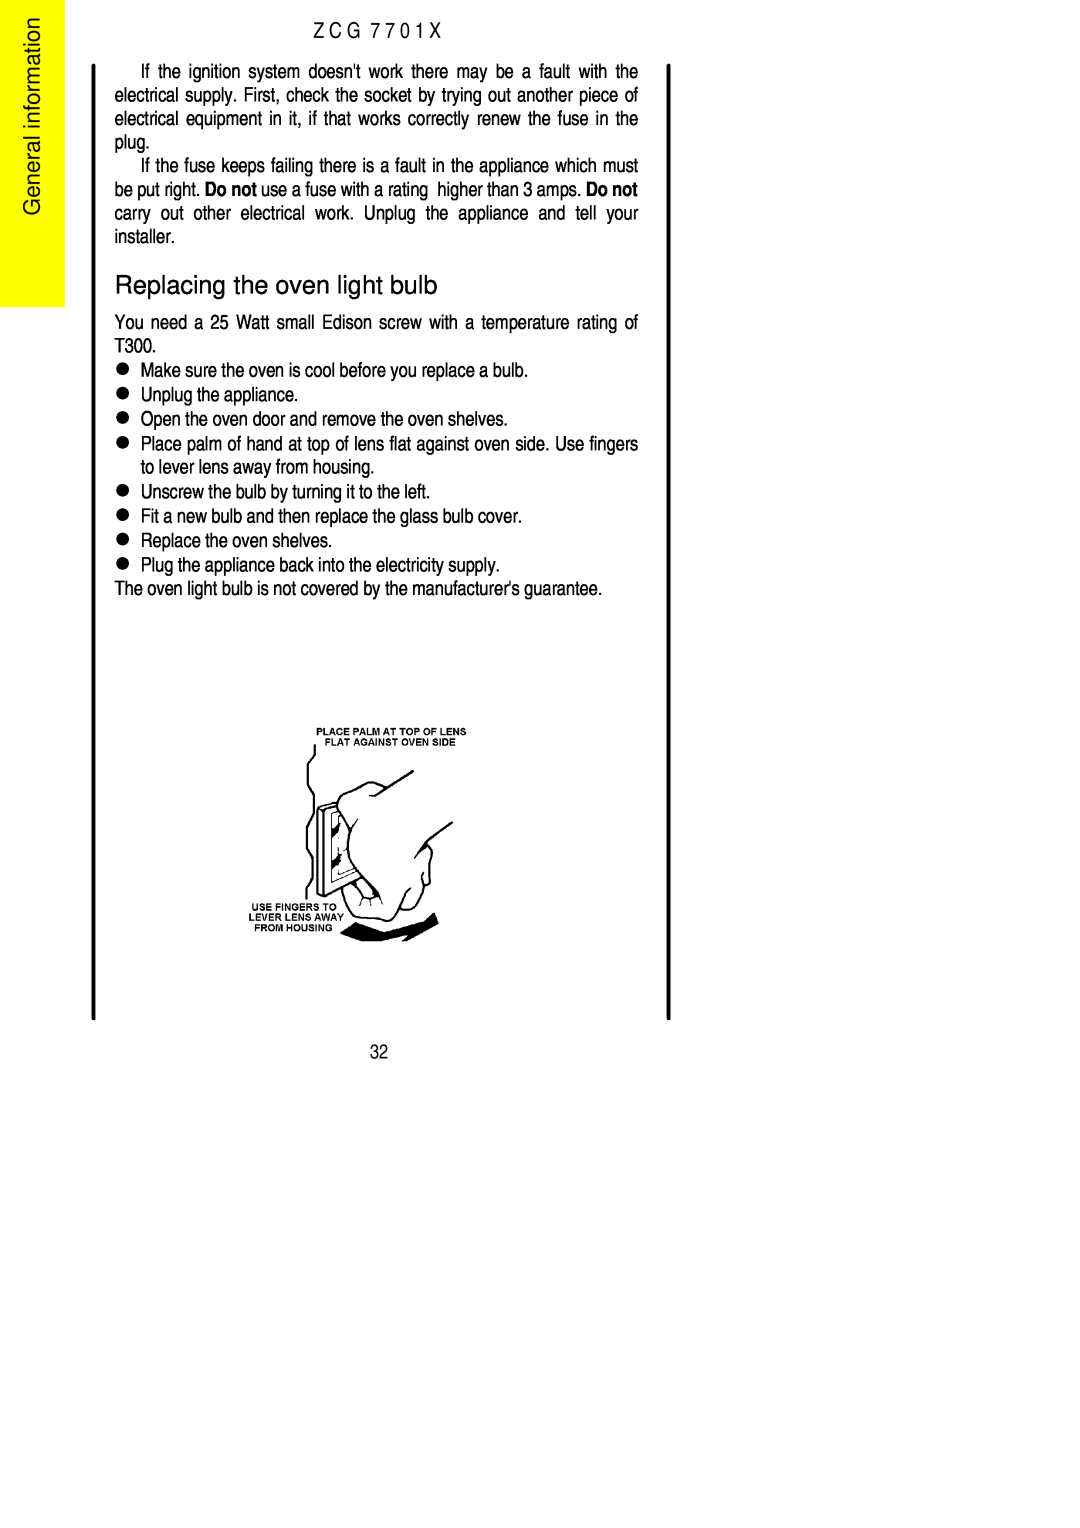 Zanussi ZCG 7701X manual Replacing the oven light bulb, General information, Z C G 7 7 